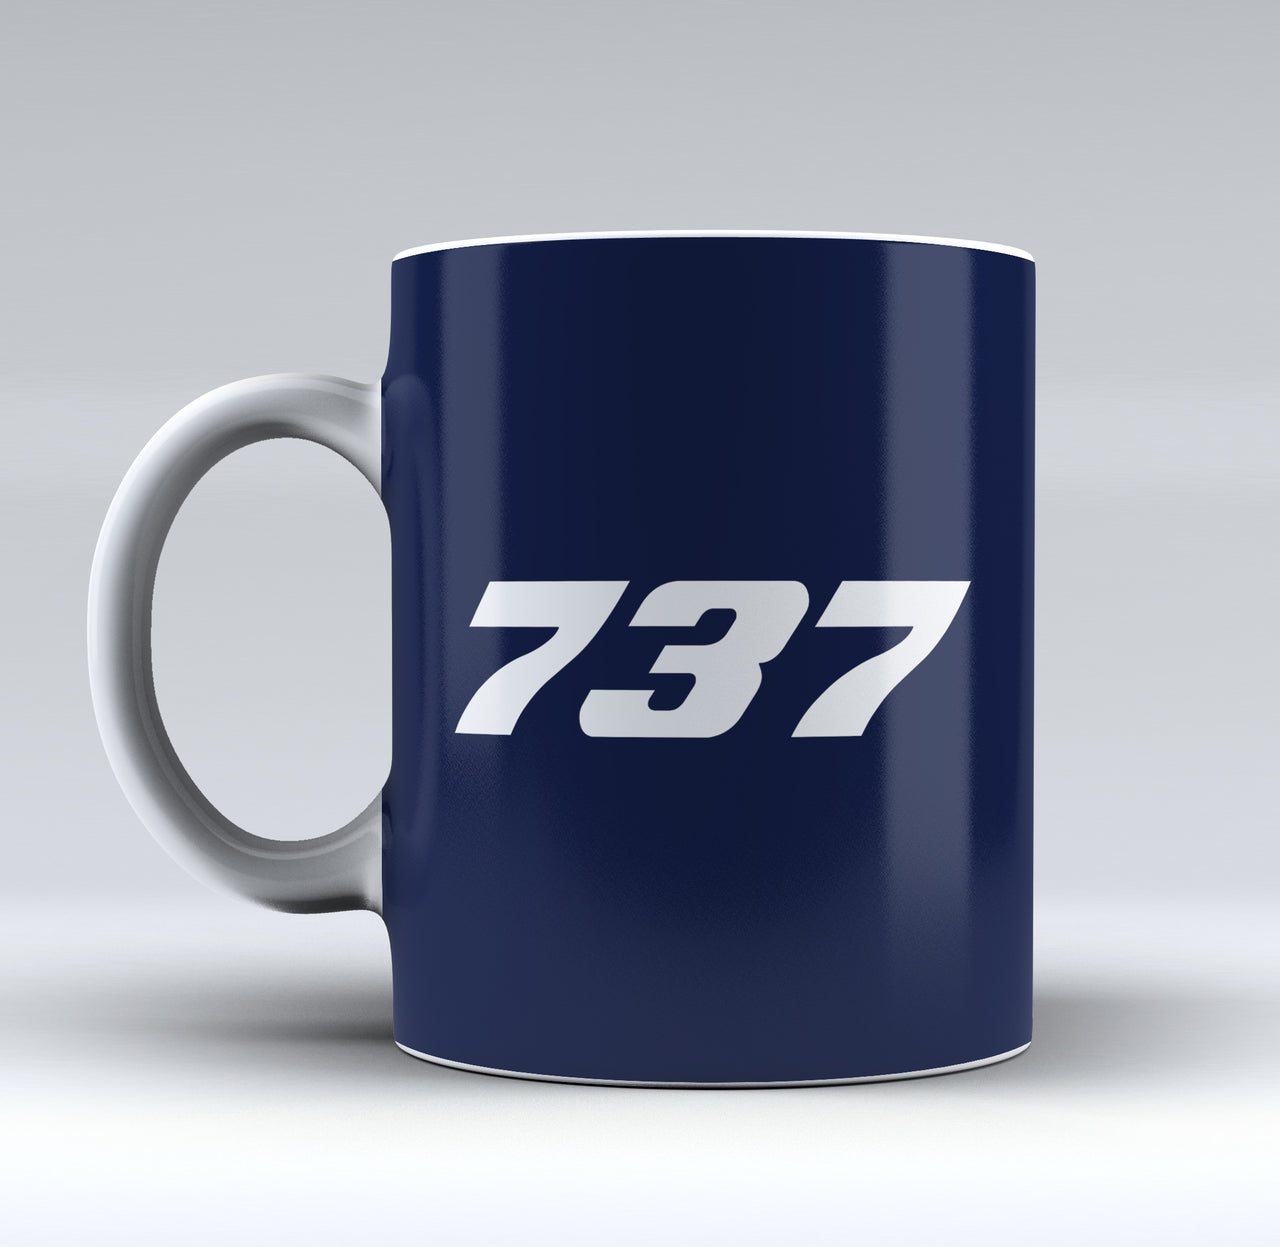 737 Flat Text Designed Mugs